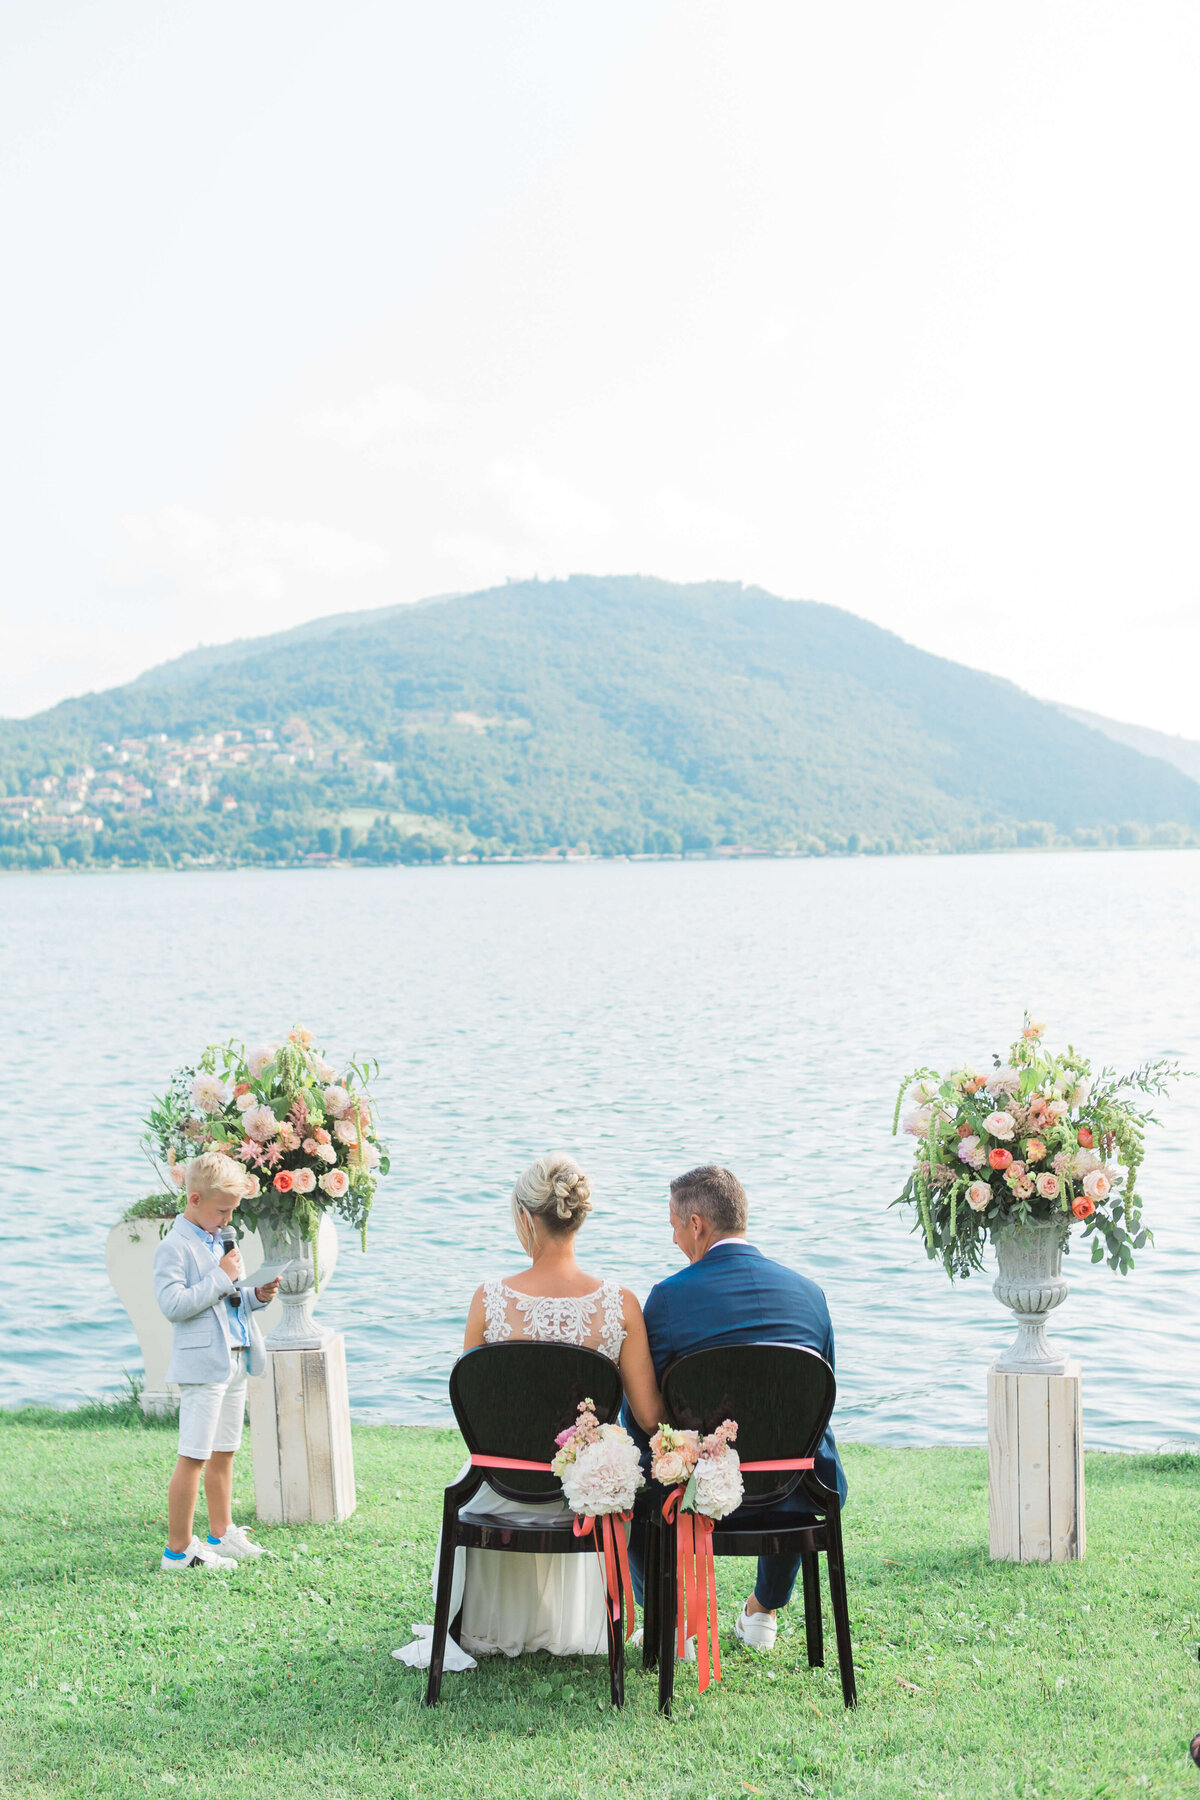 Wedding K&D - Lago d'Iseo - Italy 2018 33-1